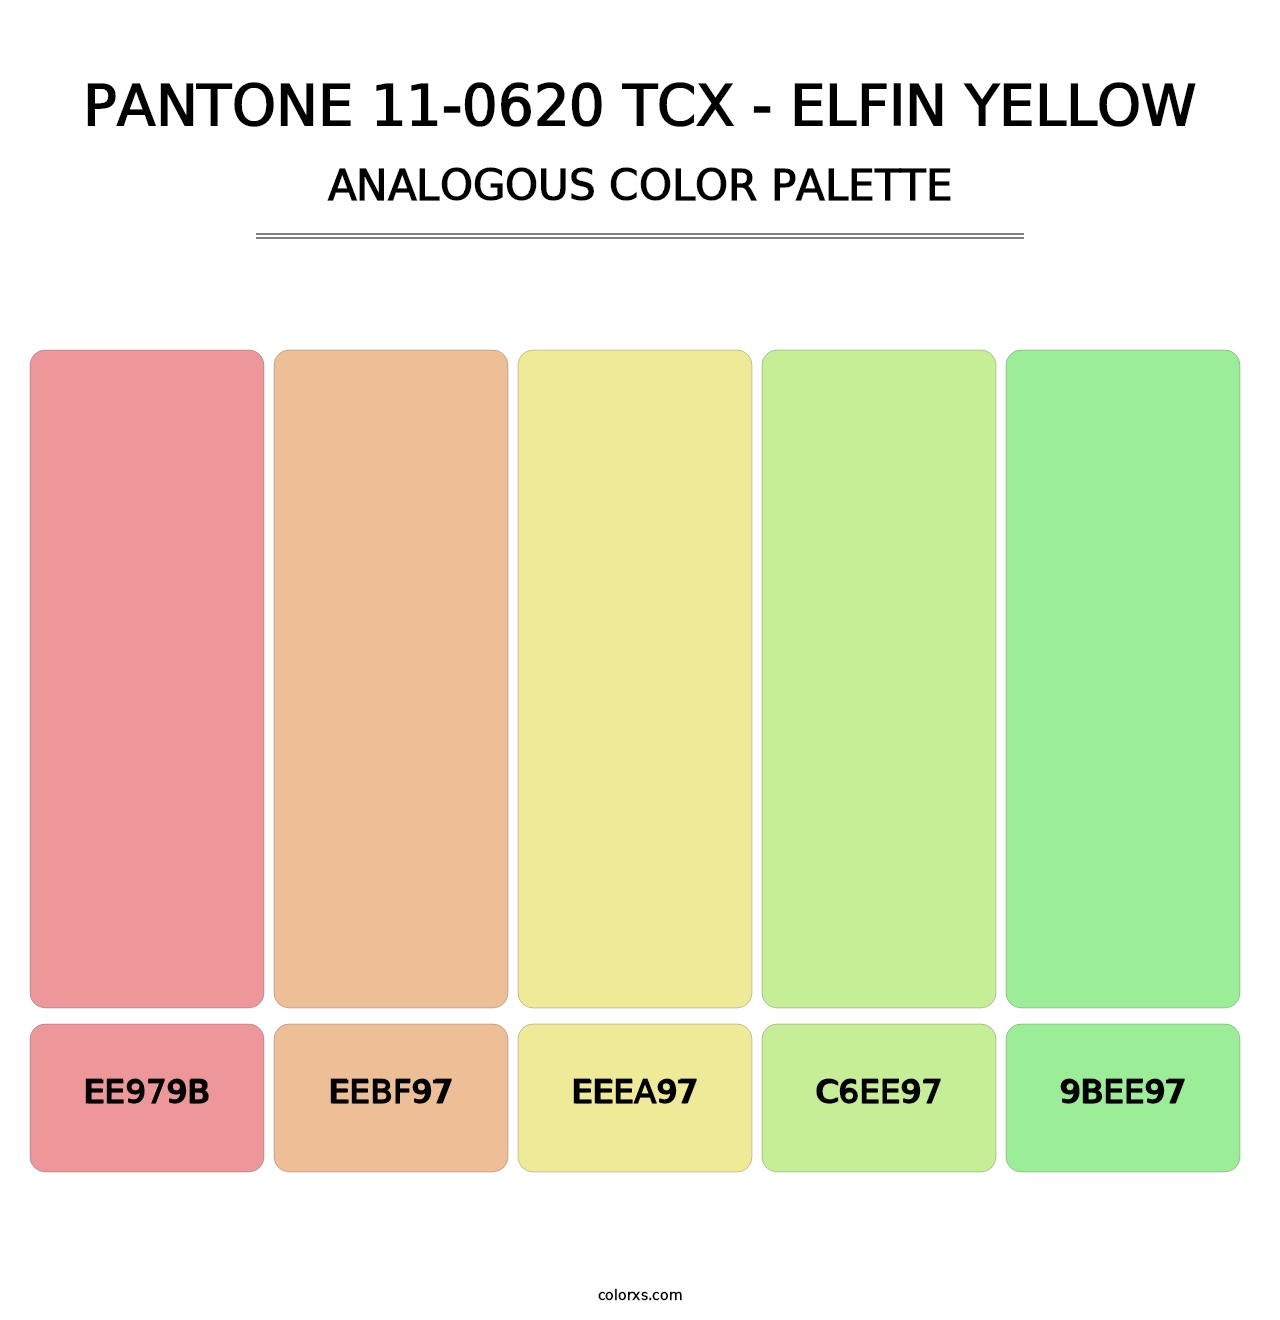 PANTONE 11-0620 TCX - Elfin Yellow - Analogous Color Palette